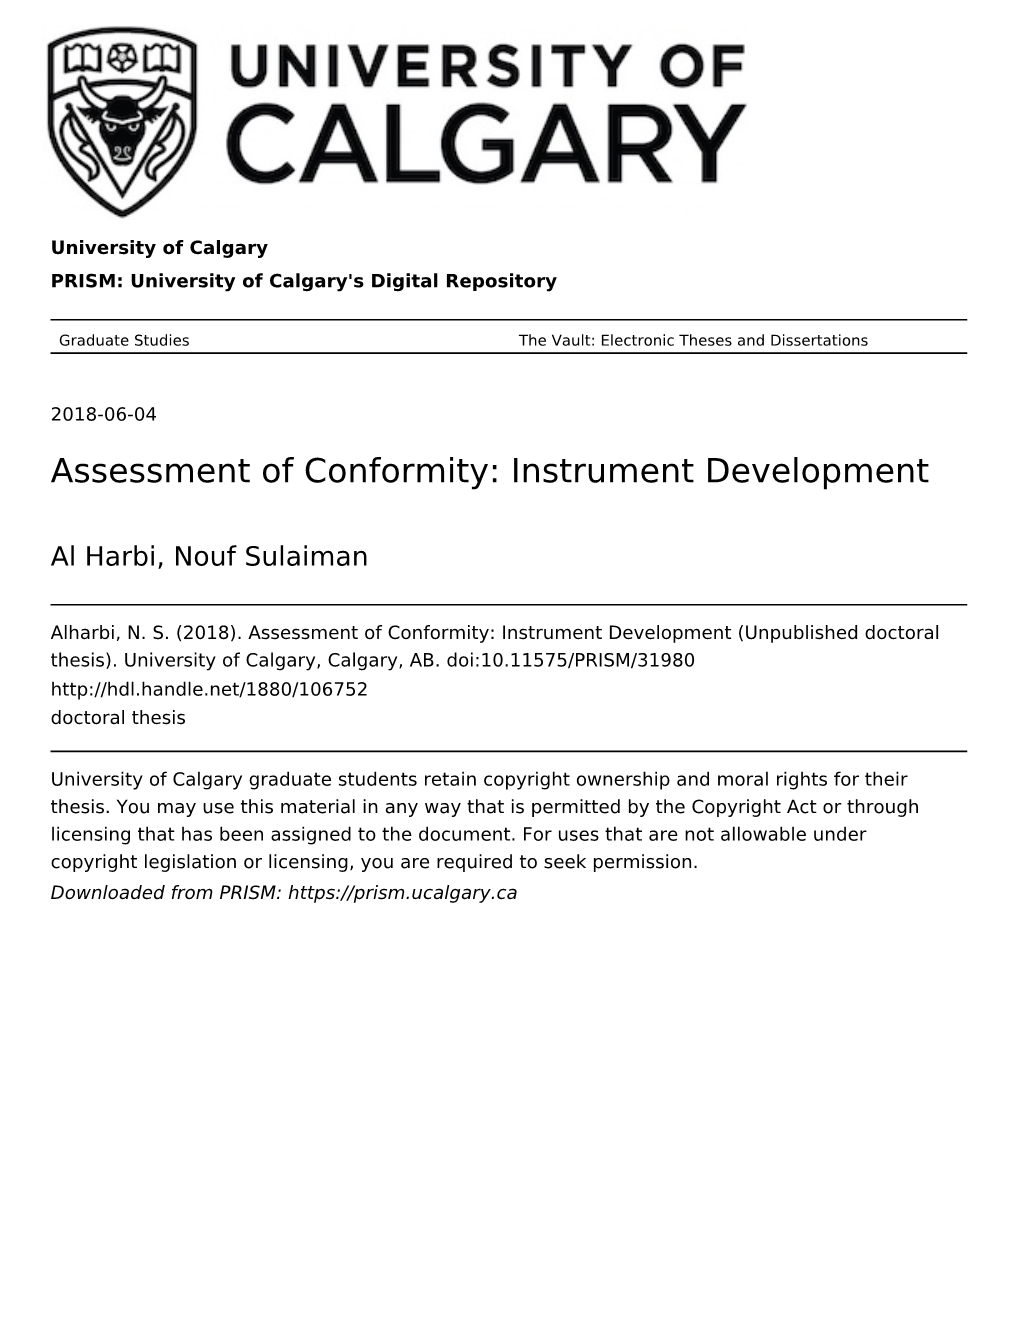 Assessment of Conformity: Instrument Development